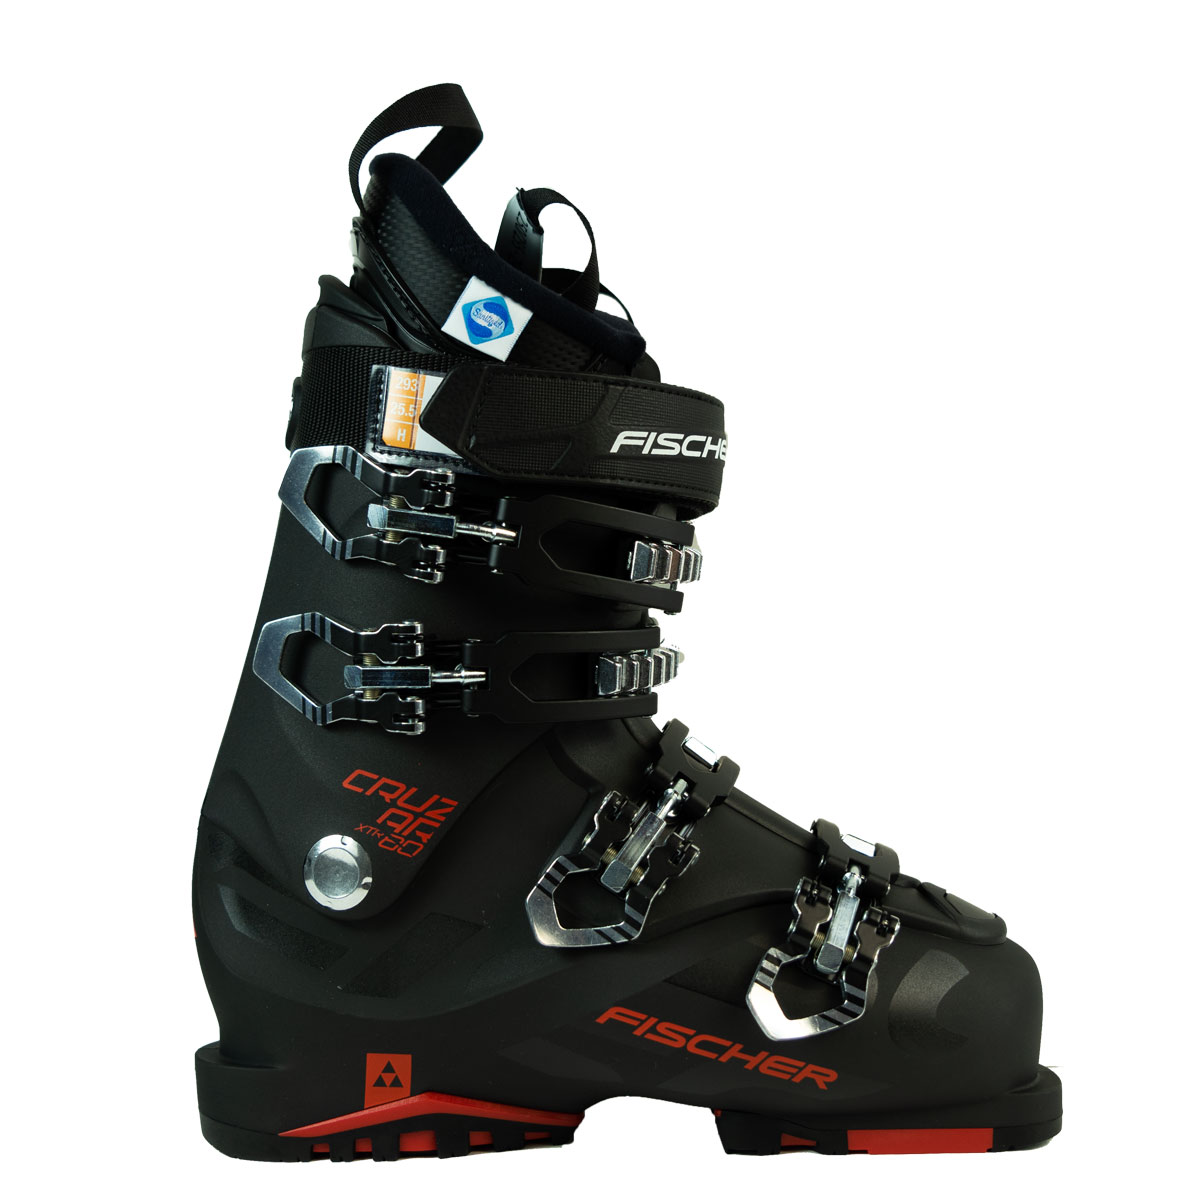 ski boots black friday sale